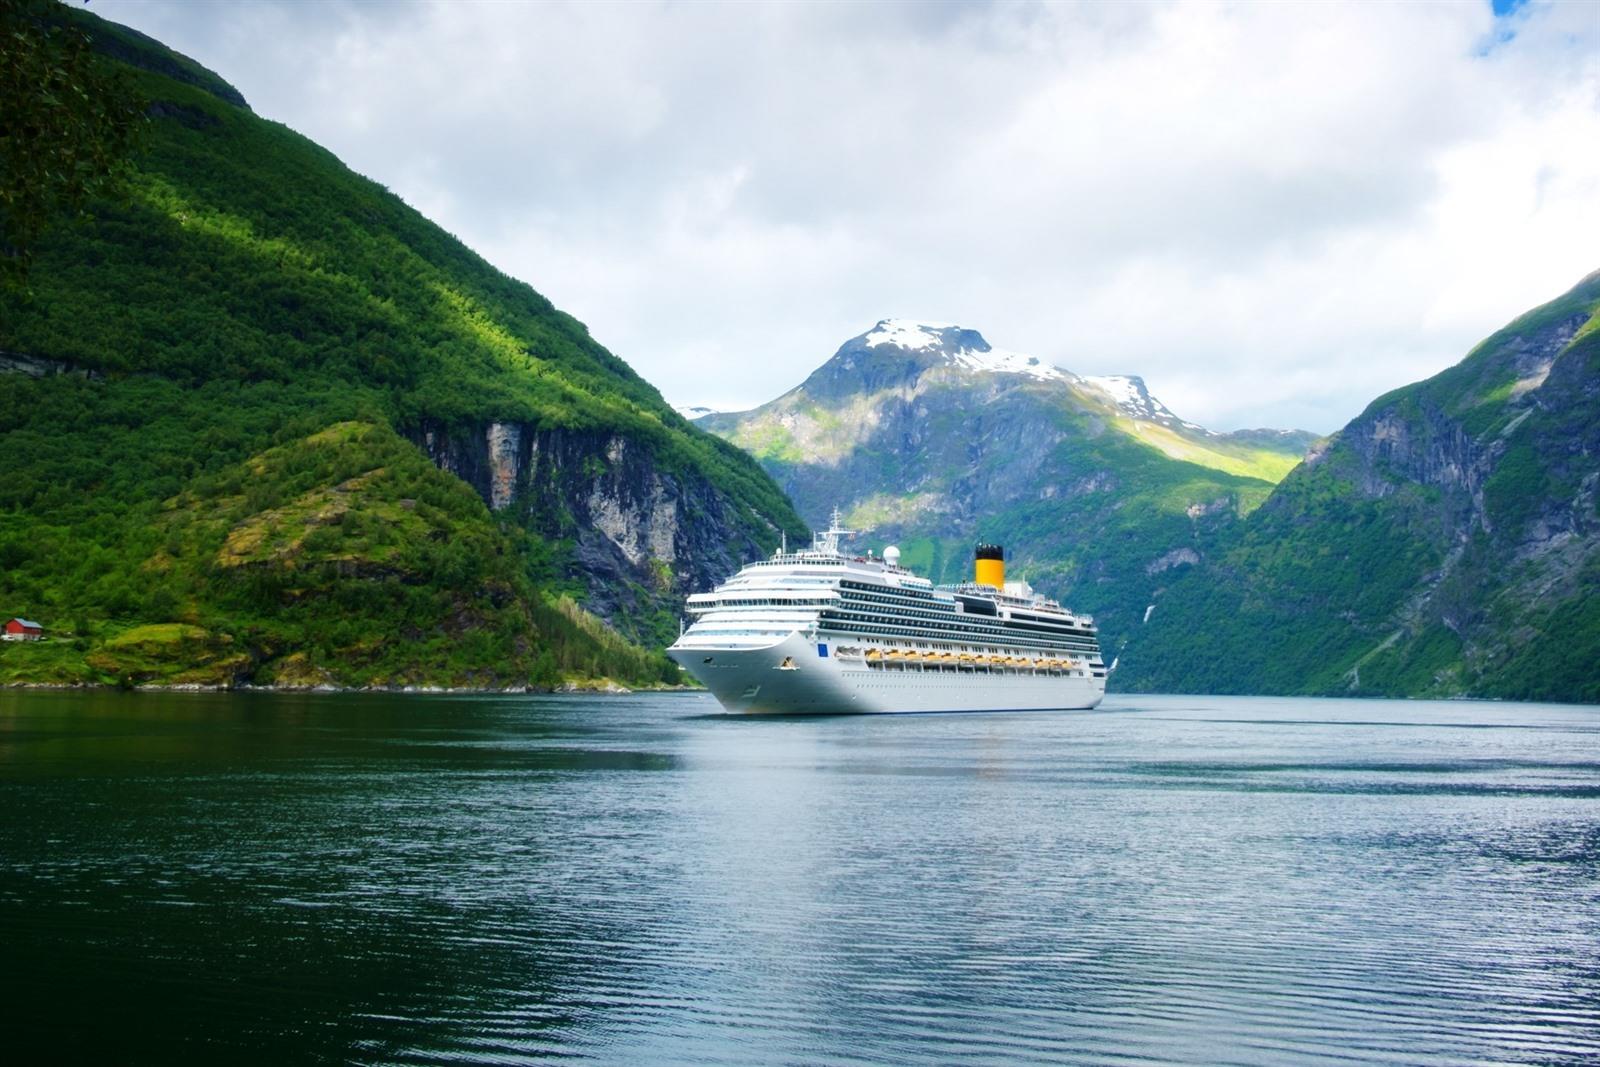 cruise noorse fjorden vanuit nederland